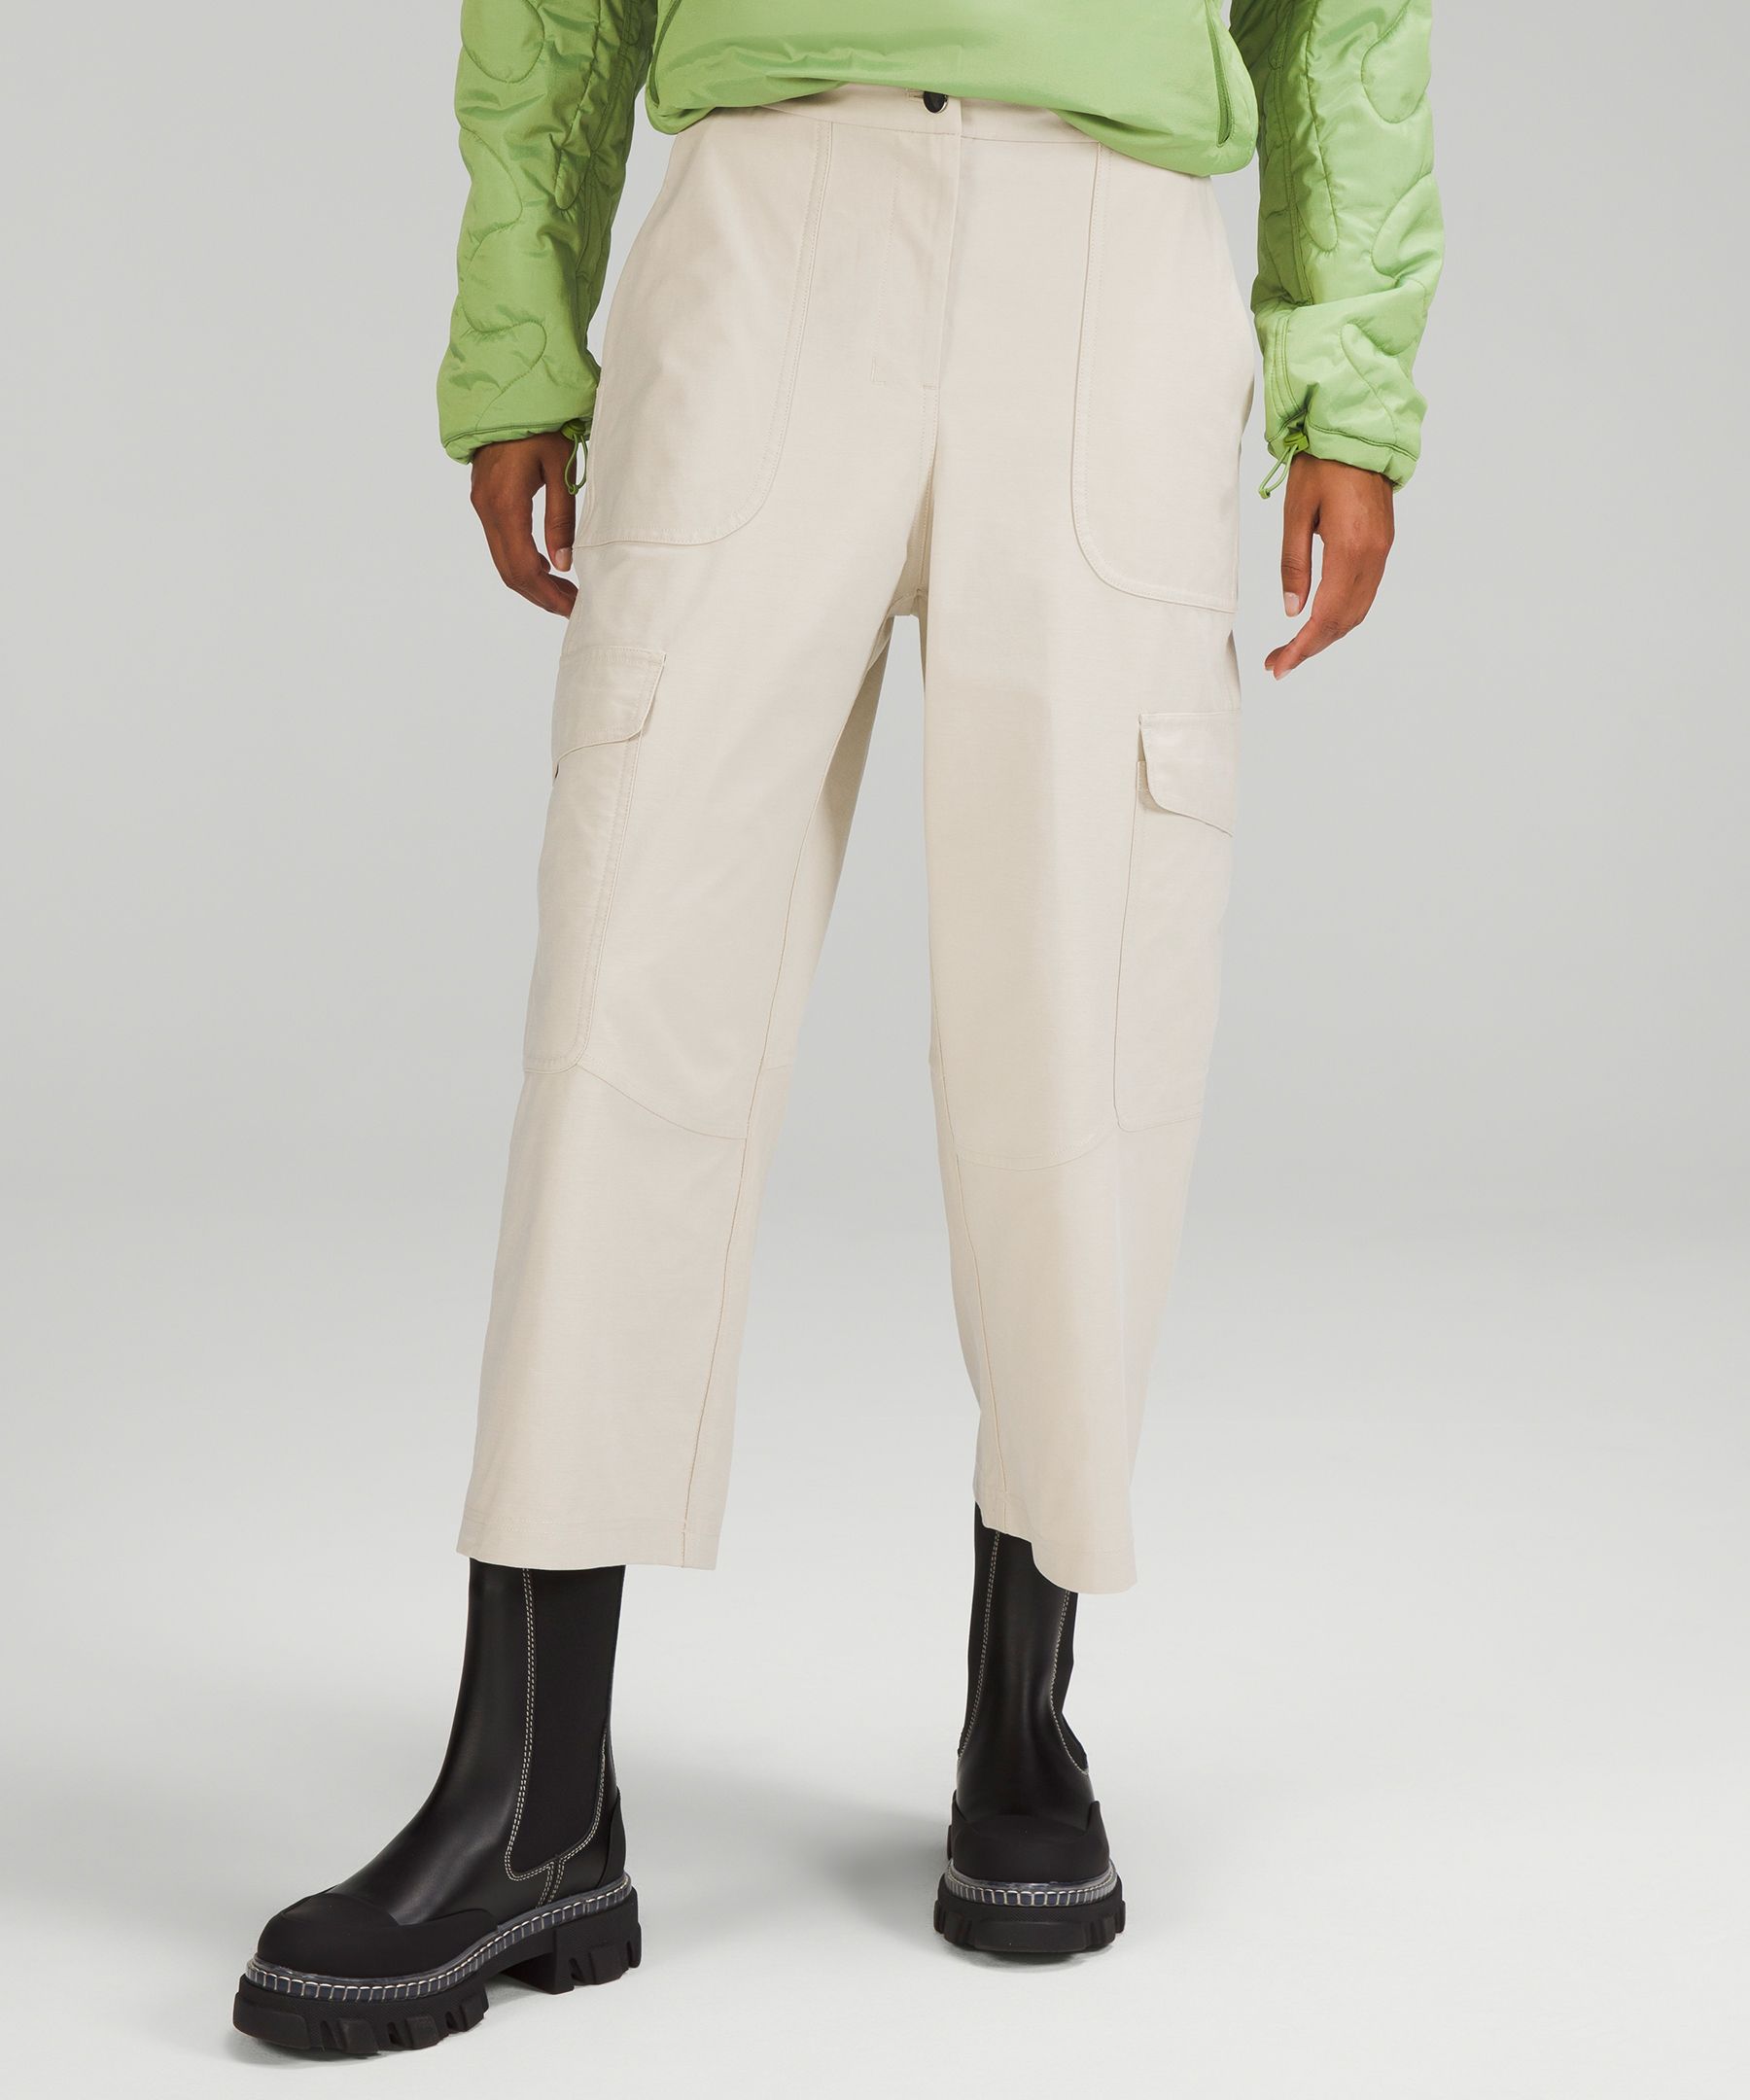 Neon Green Quick Dry Cargo Pants